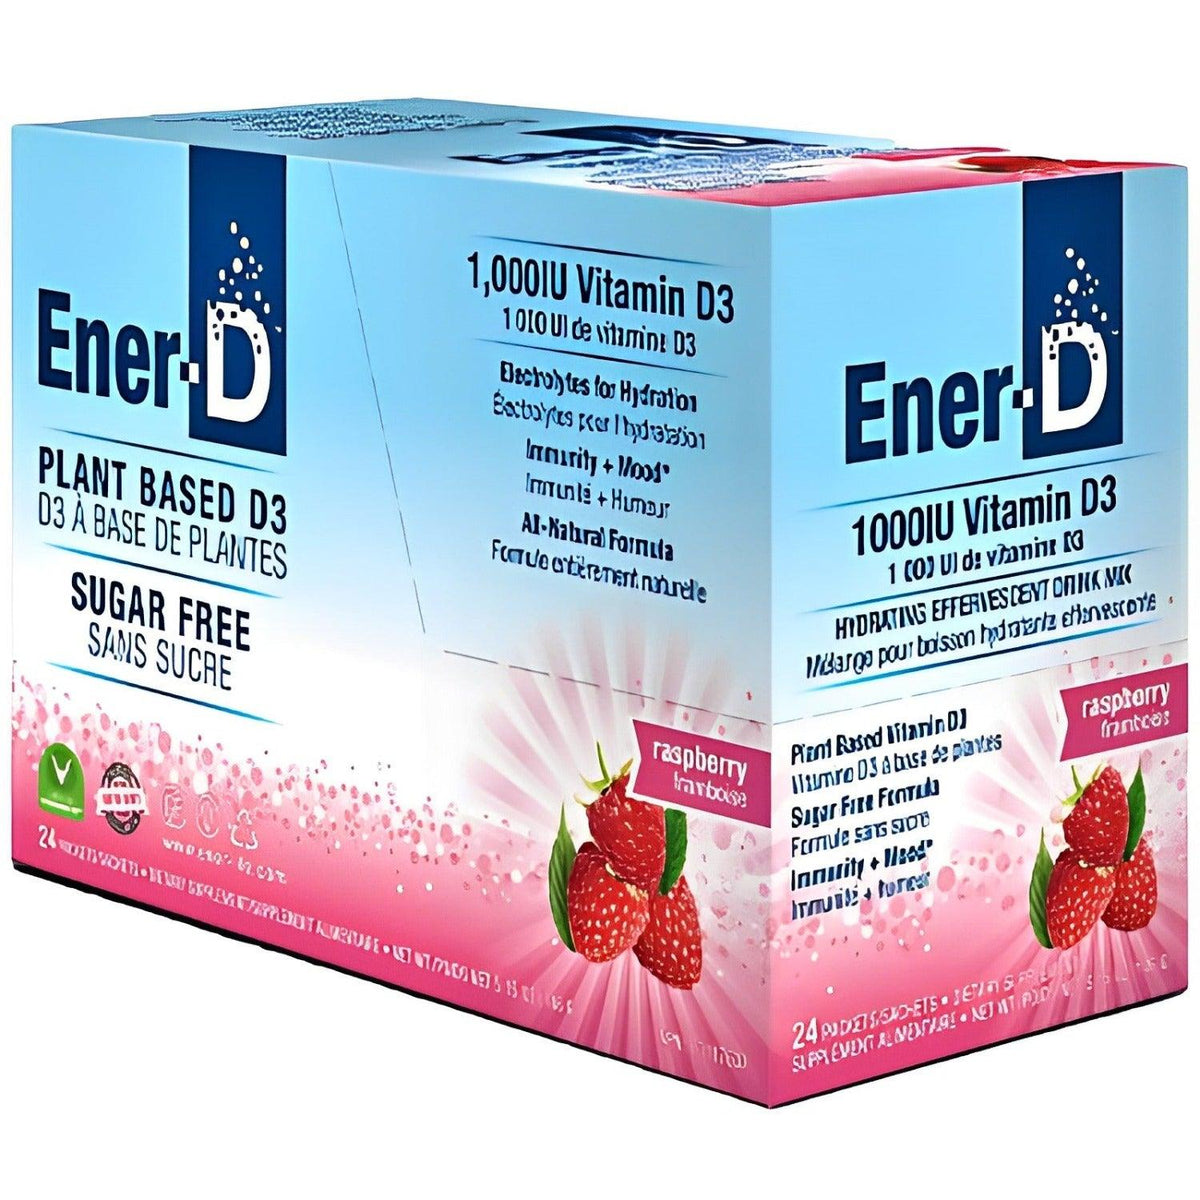 Ener-Life Vitamin D3 1000 IU Raspberry 24 Packs*Product Expiry November'2024* Vitamins - Vitamin D at Village Vitamin Store